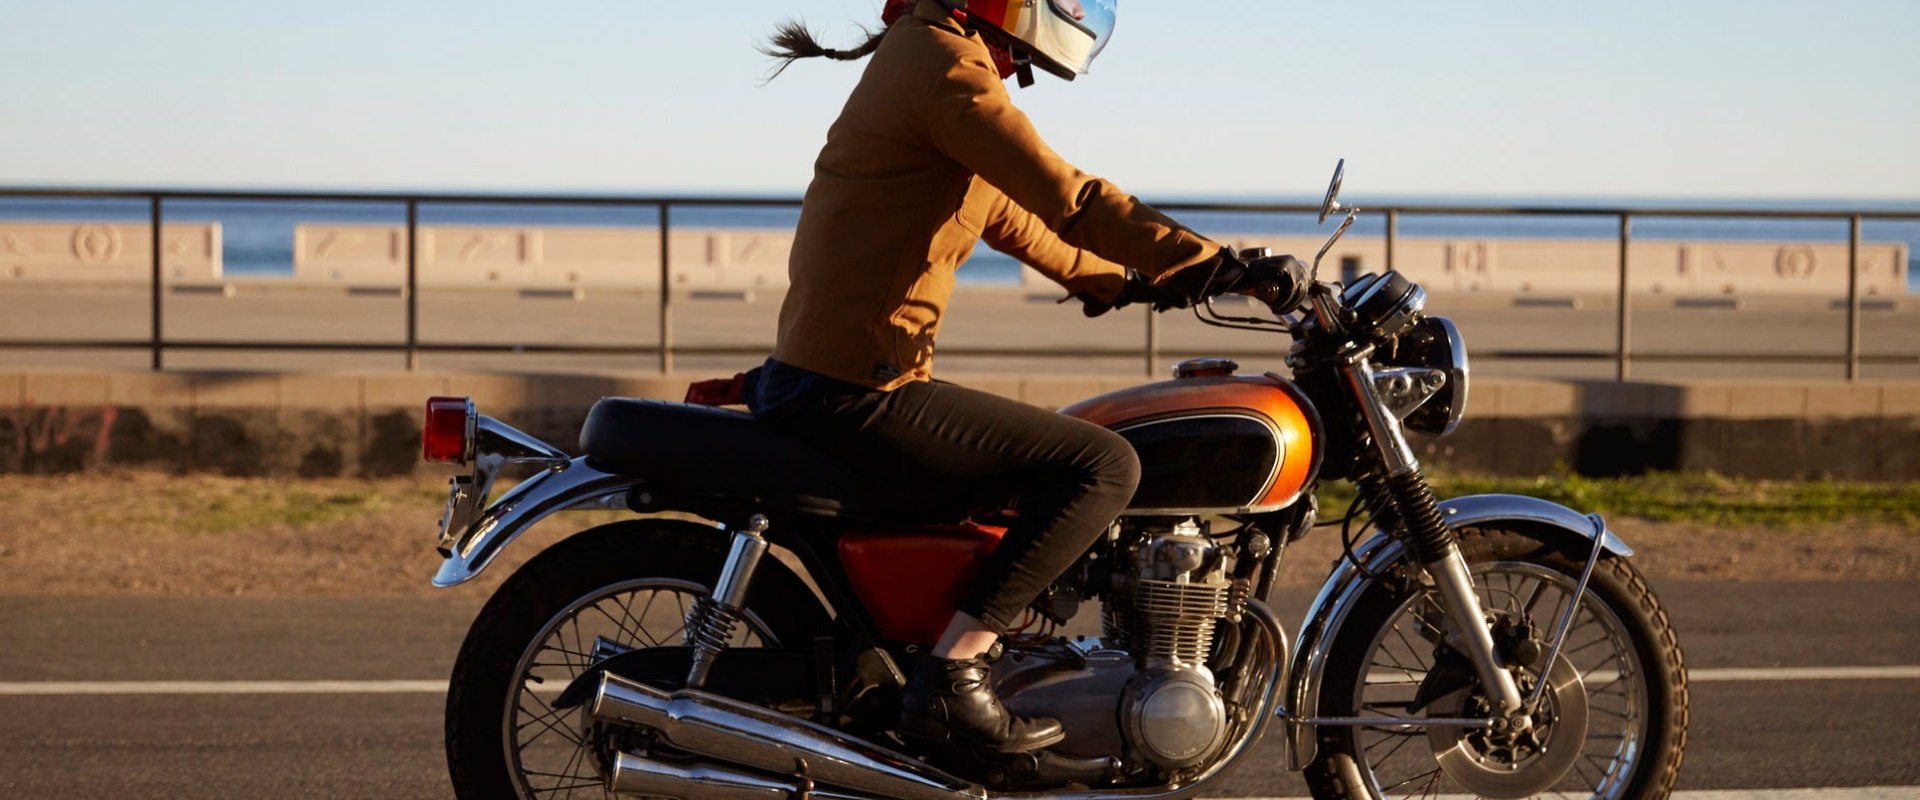 Moped Insurance New Riders Need